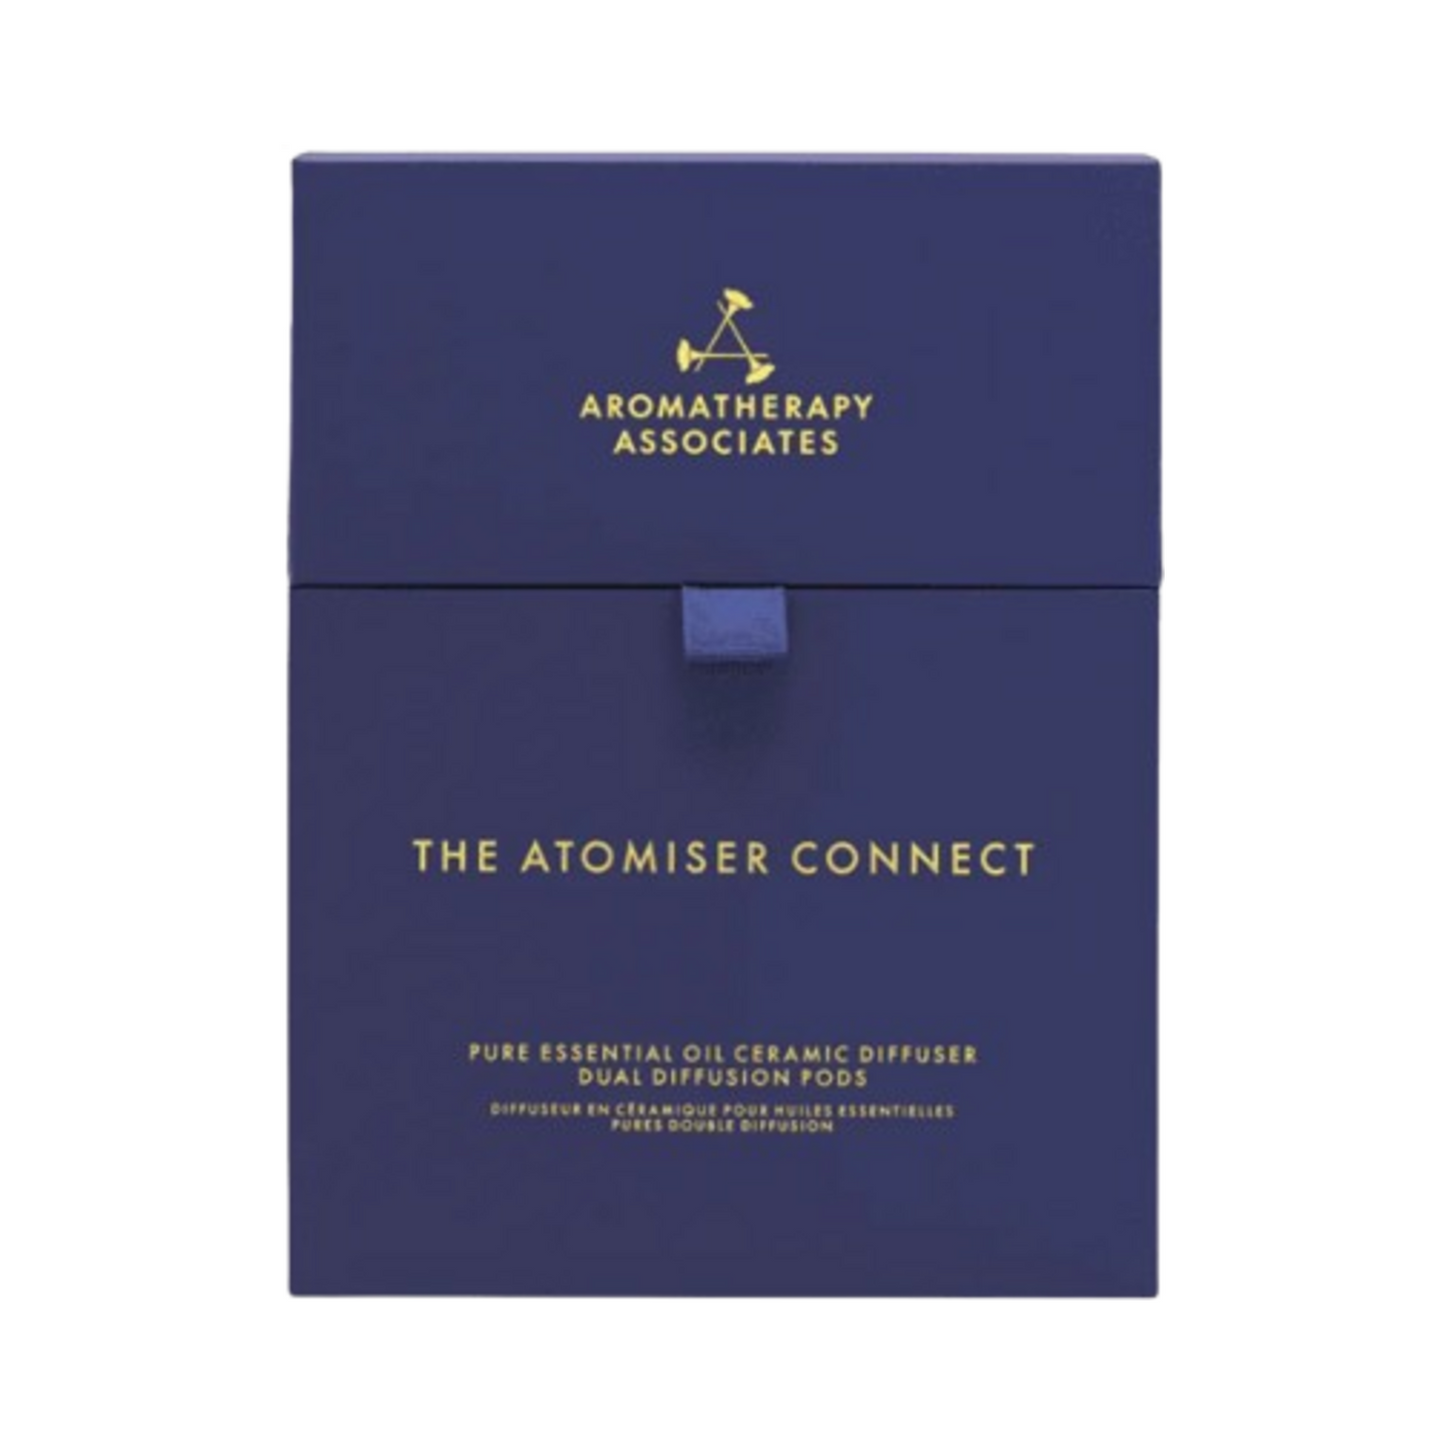 Aromatherapy Associates Atomiser Connect